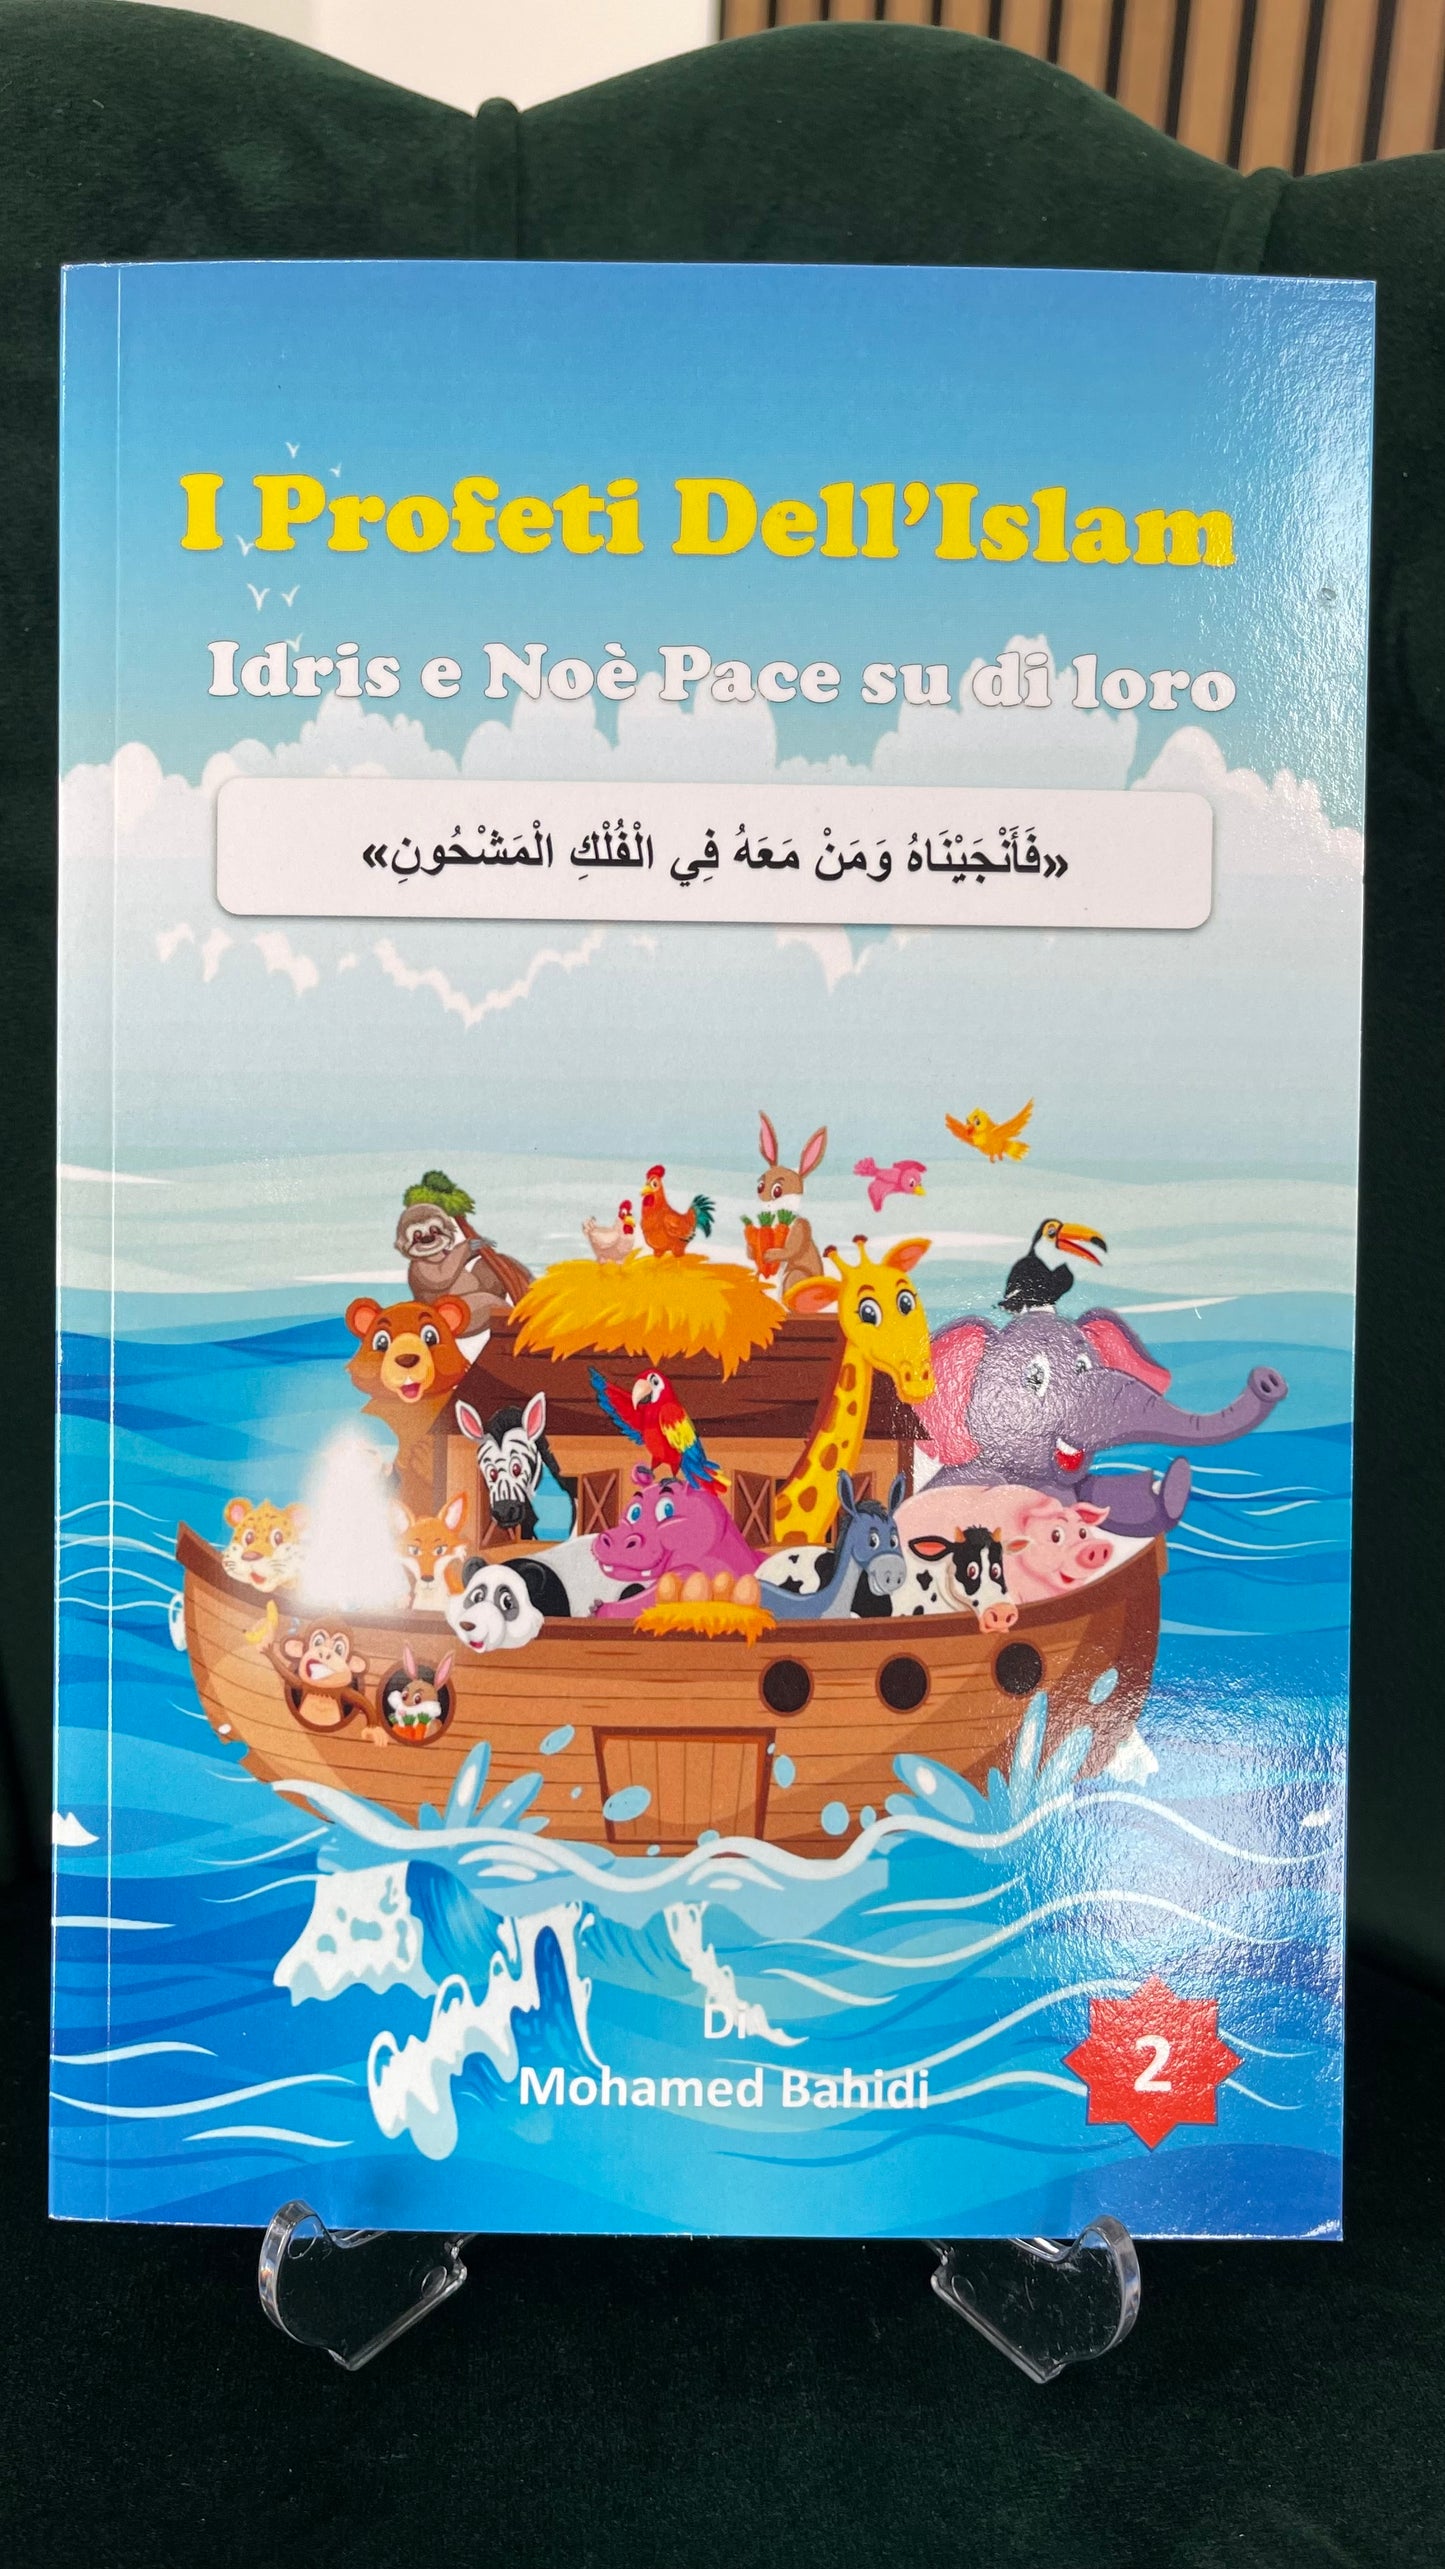 I profeti nell’Islam - Idris e Noe